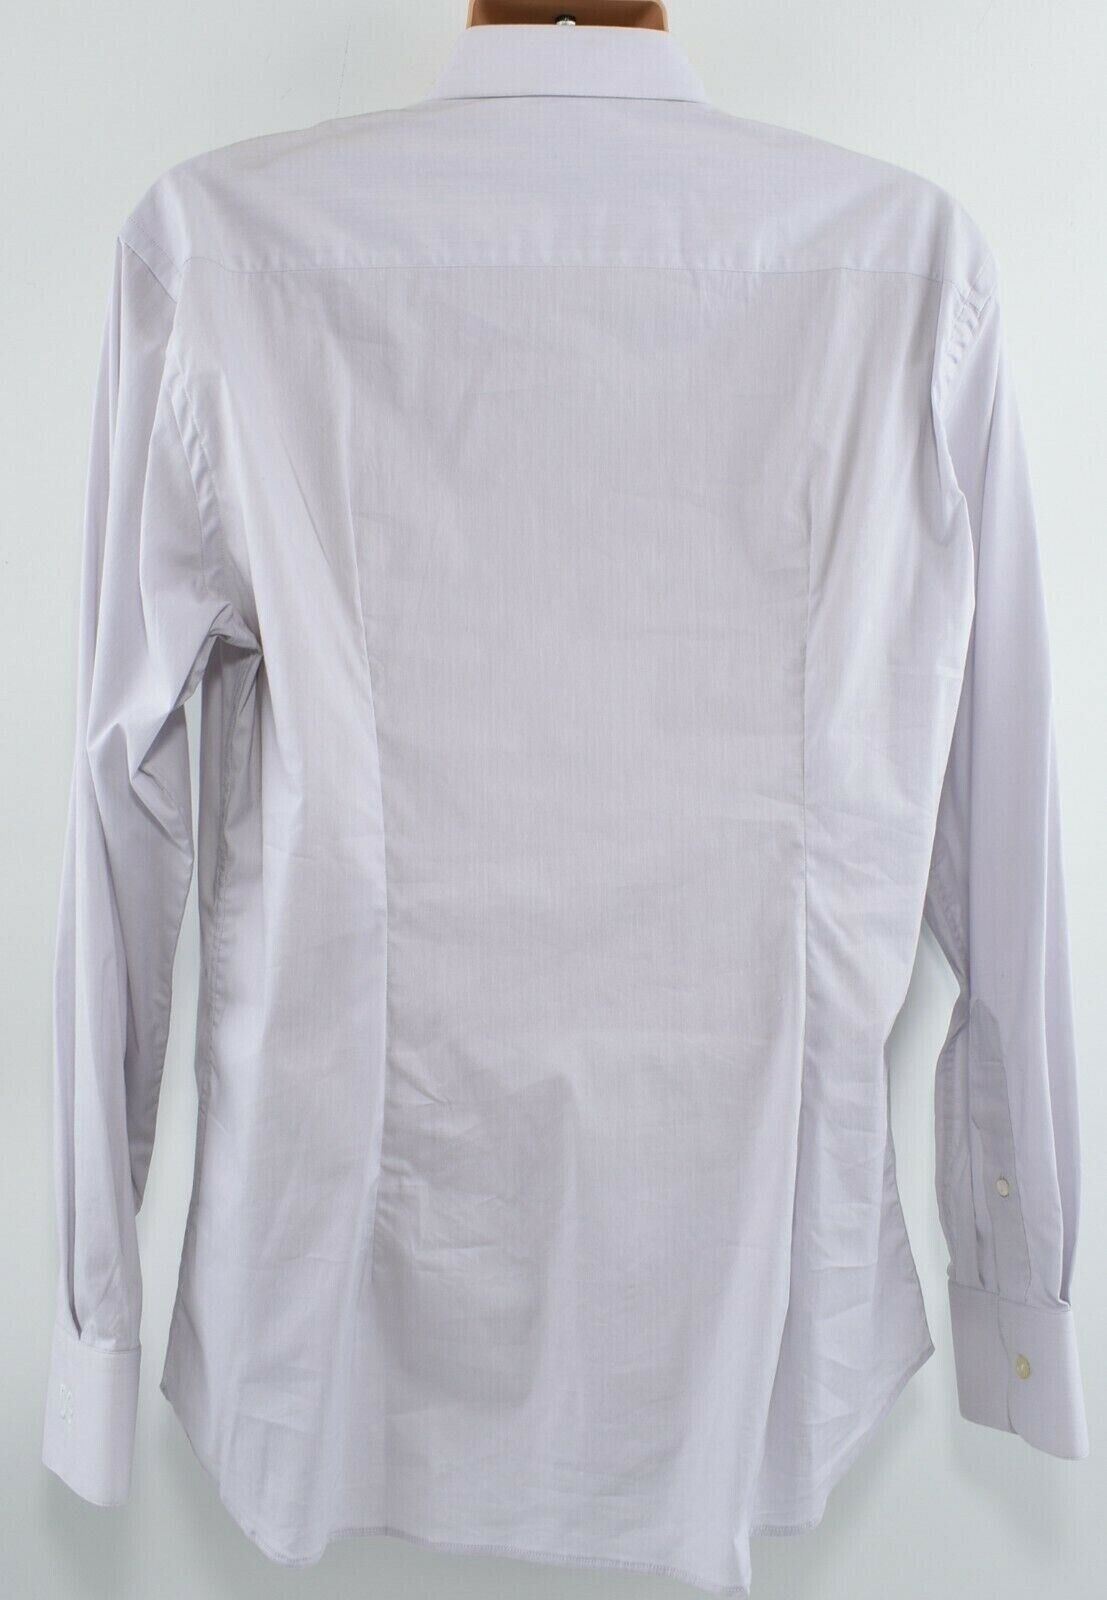 DOLCE & GABBANA Mens Long Sleeve Light Grey Shirt, size collar 17"